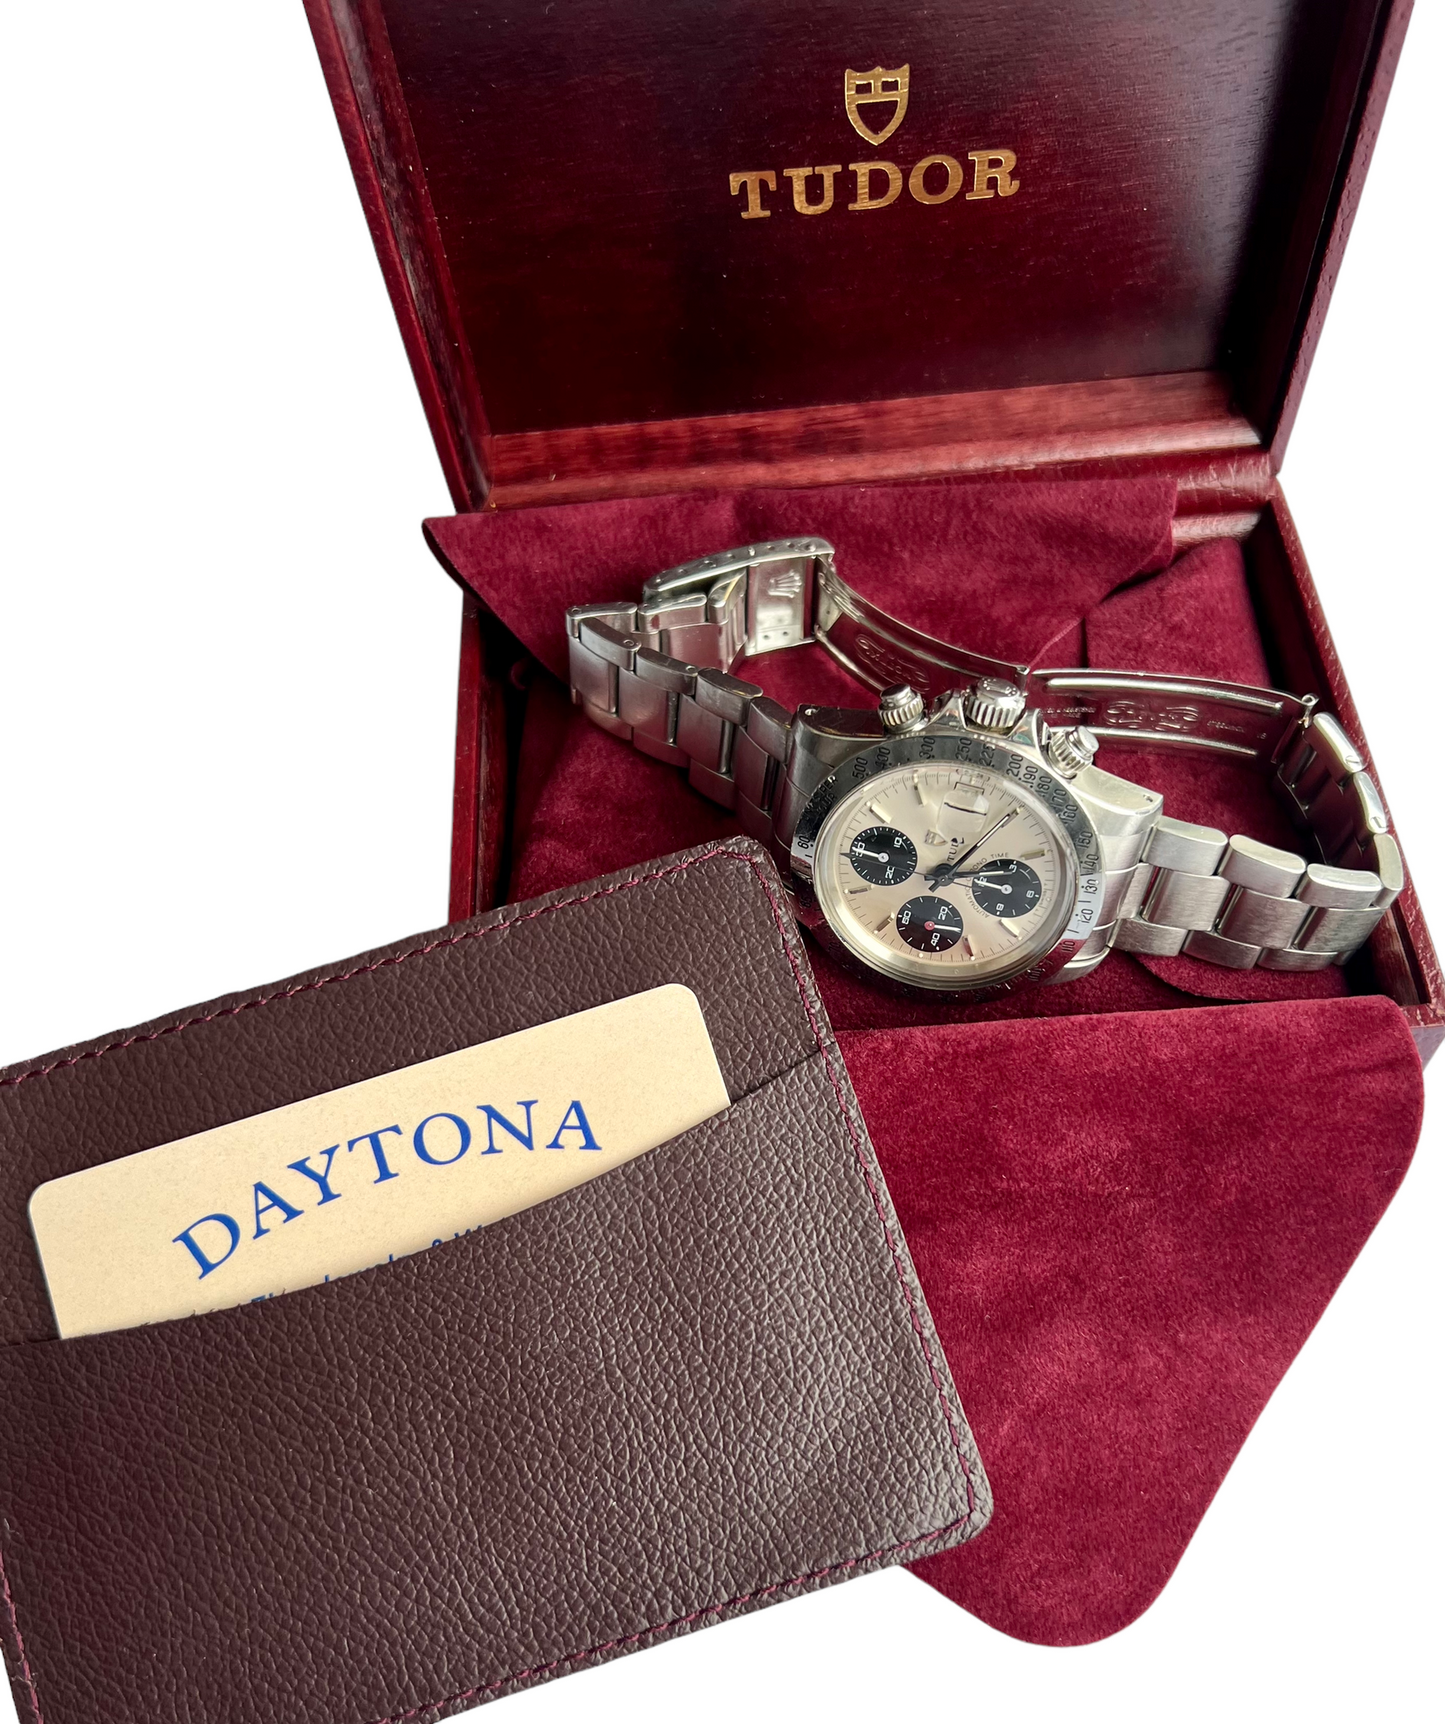 Tudor Oysterdate Big Block chronograph 'Big Block' Ref. 79180 With Tritium Panda Dial